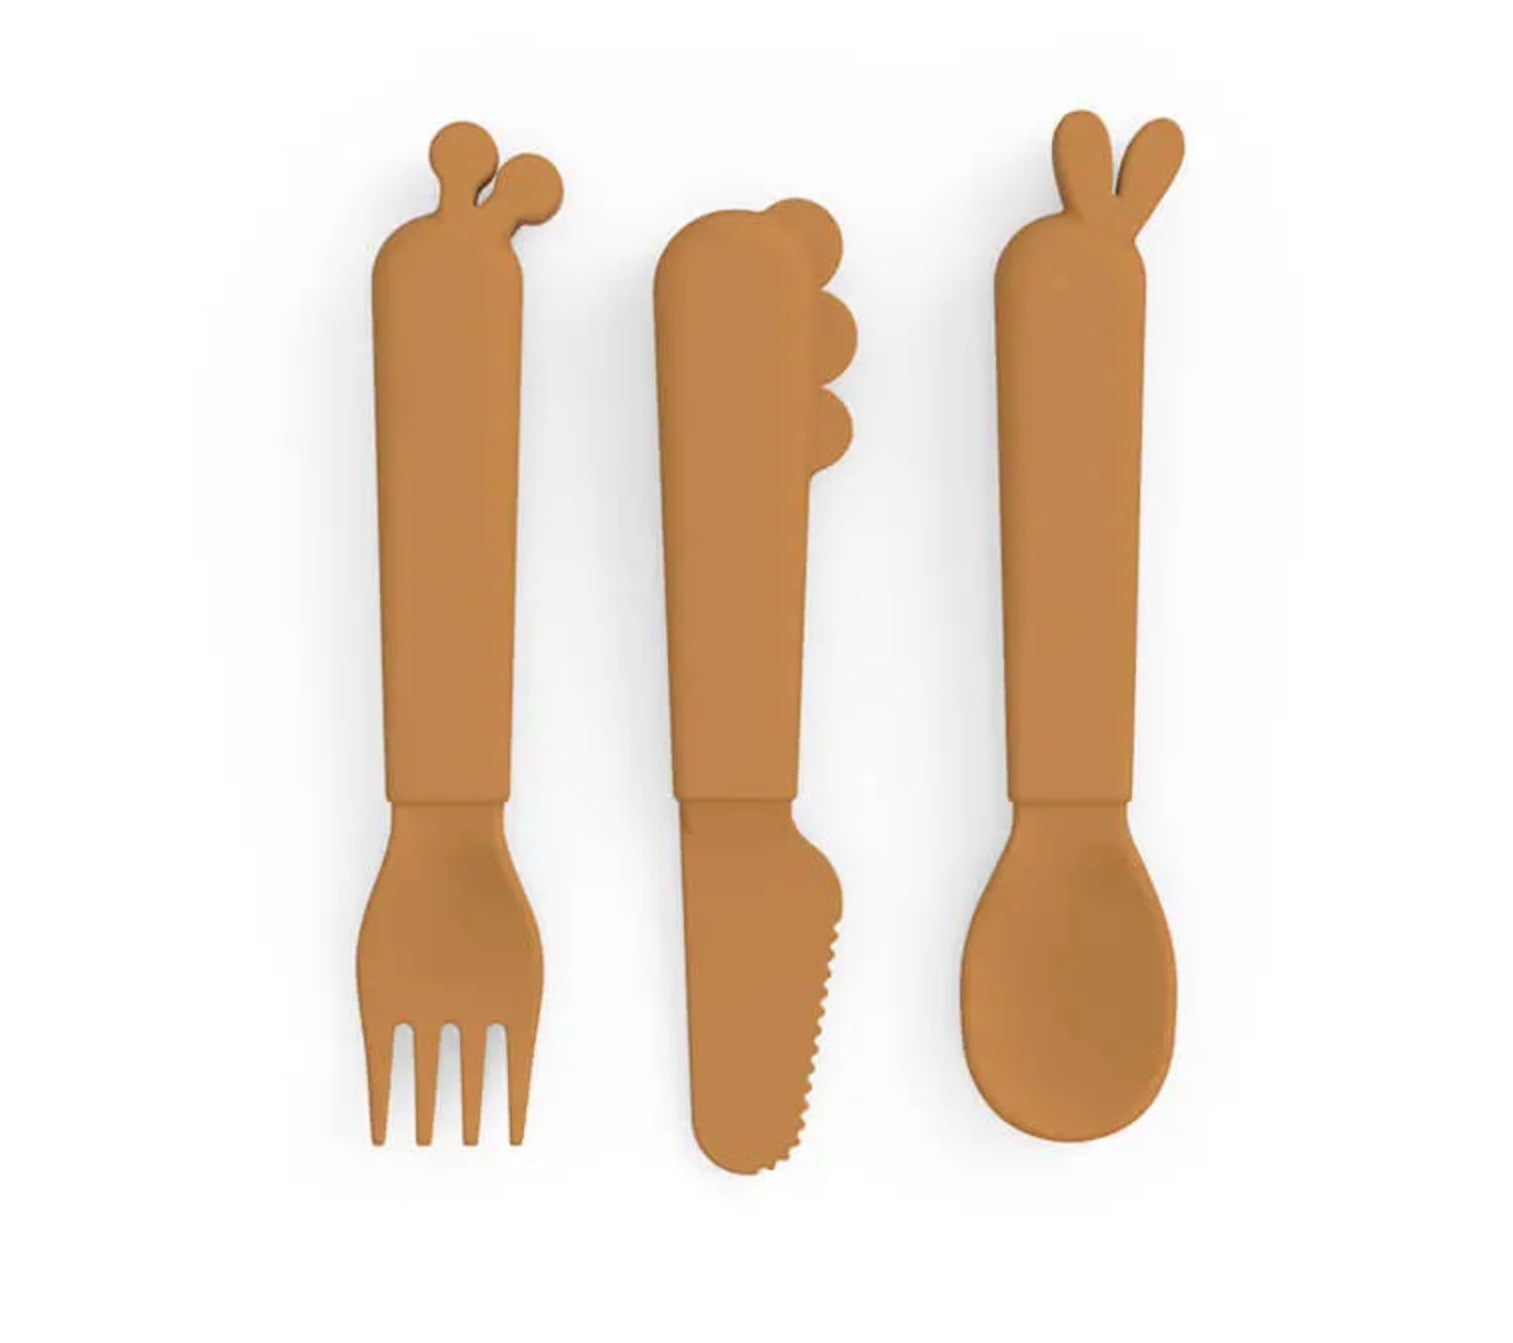 Kiddish cutlery set